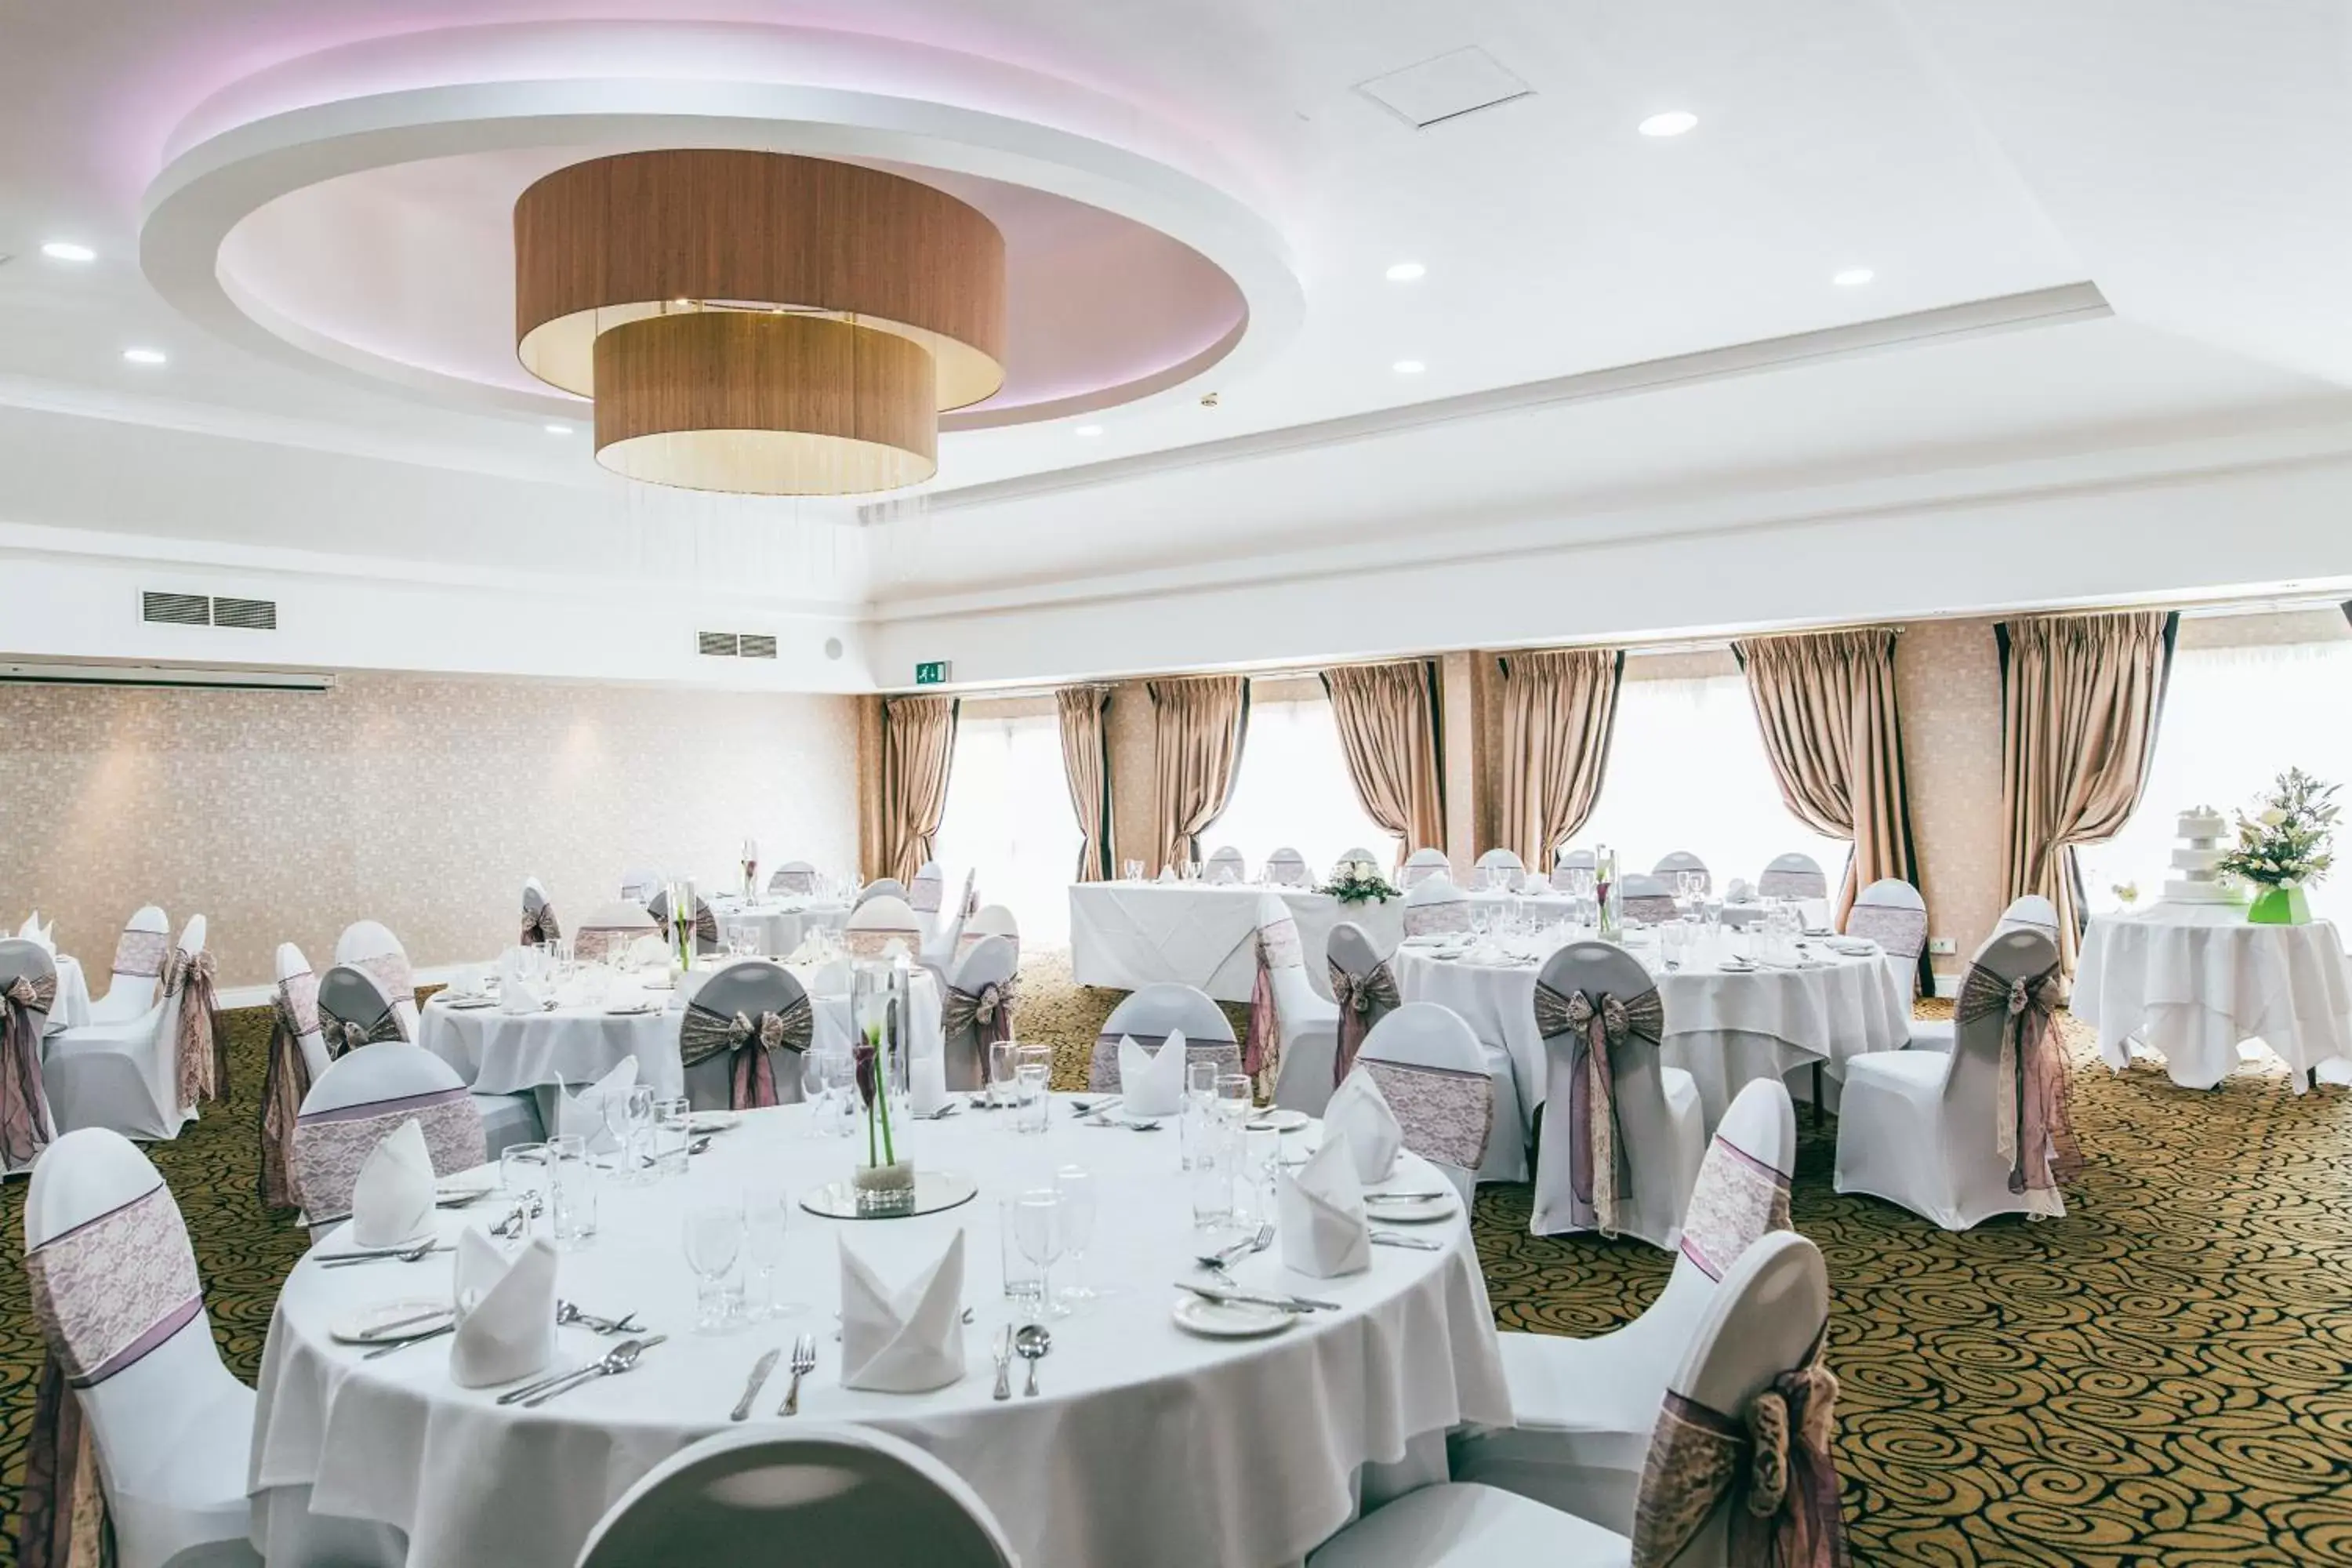 Area and facilities, Banquet Facilities in Mercure Newcastle George Washington Hotel Golf & Spa